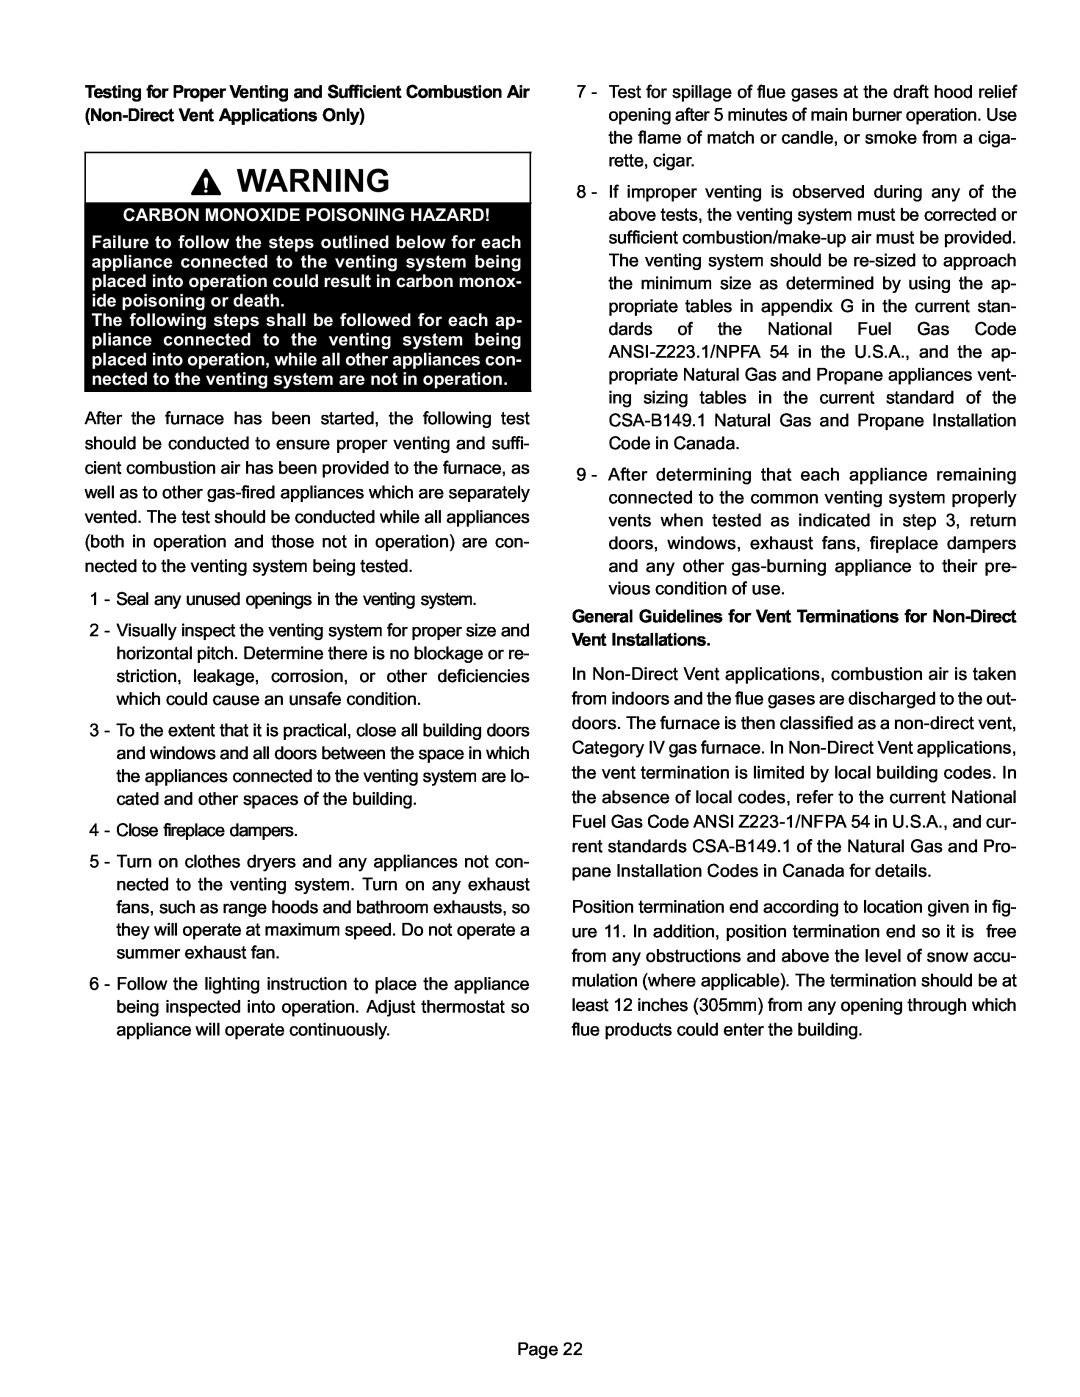 Lennox International Inc G24-200 installation instructions Carbon Monoxide Poisoning Hazard 